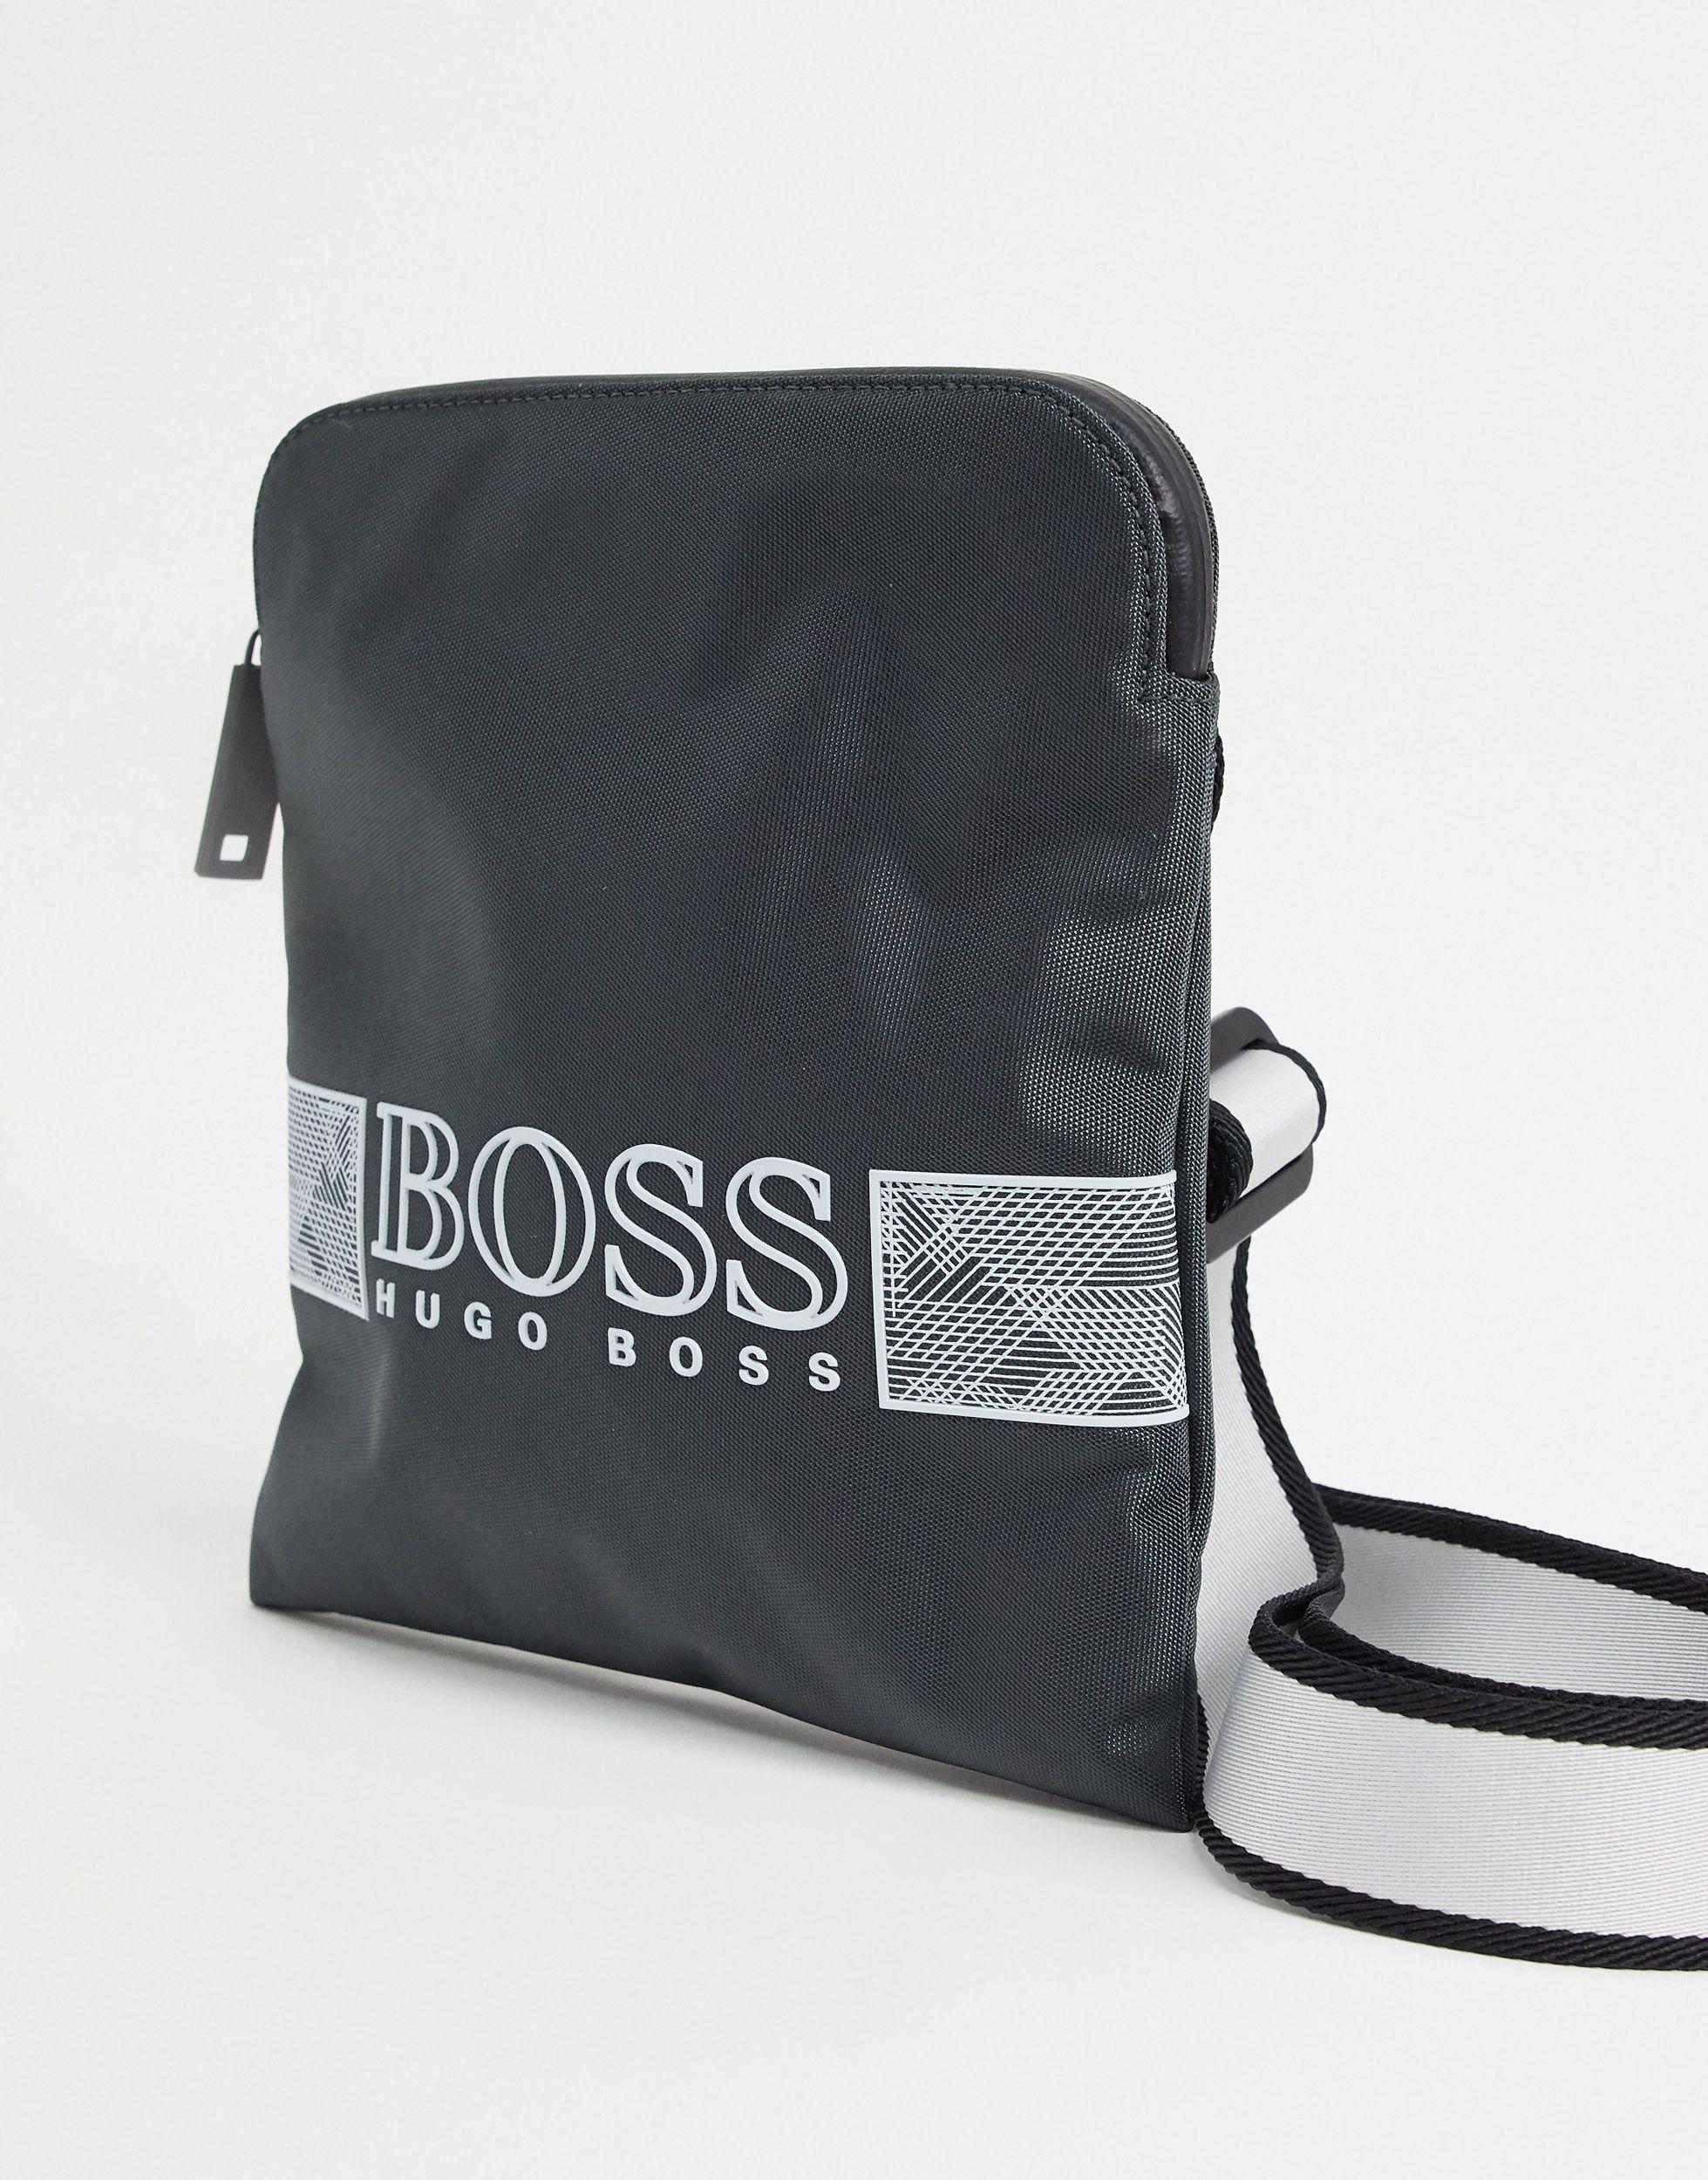 BOSS by Hugo Boss Pixel Large Logo X Body Bag in Grey for Men - Lyst